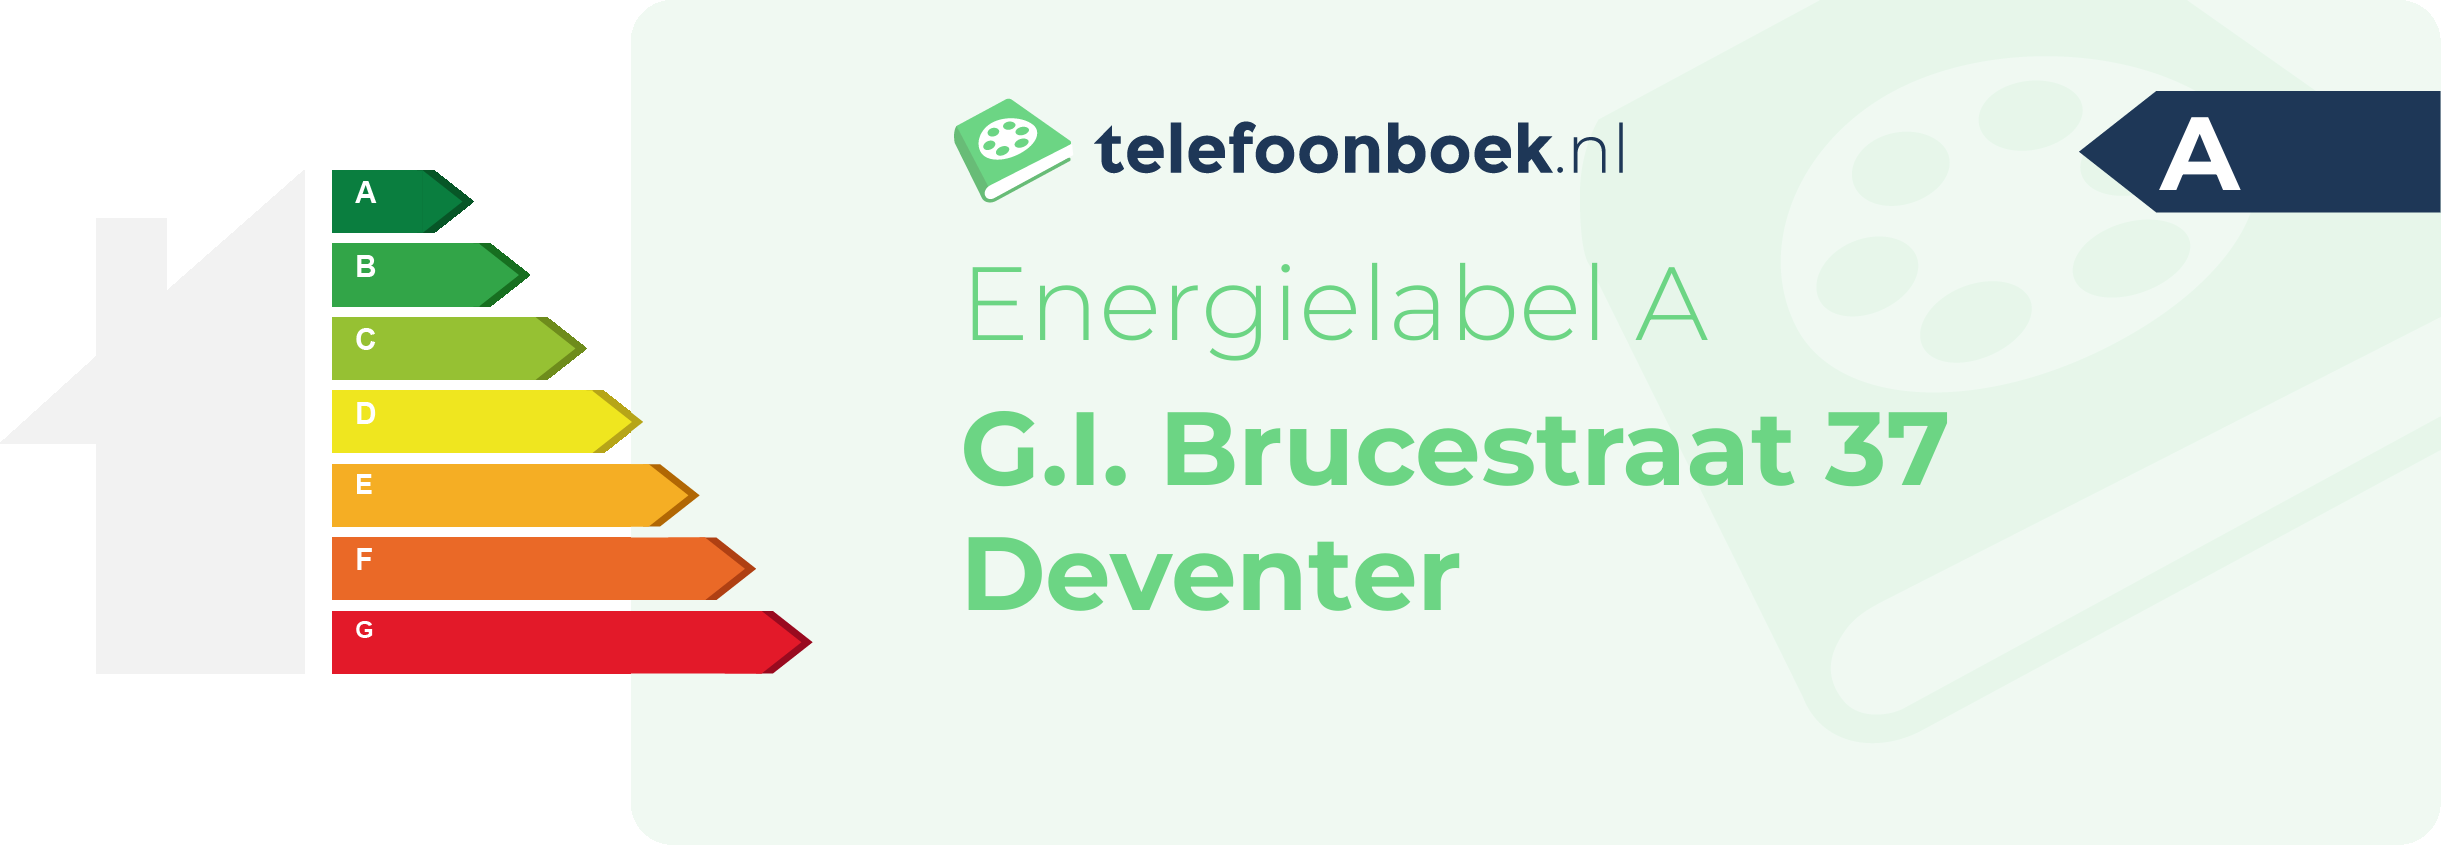 Energielabel G.I. Brucestraat 37 Deventer